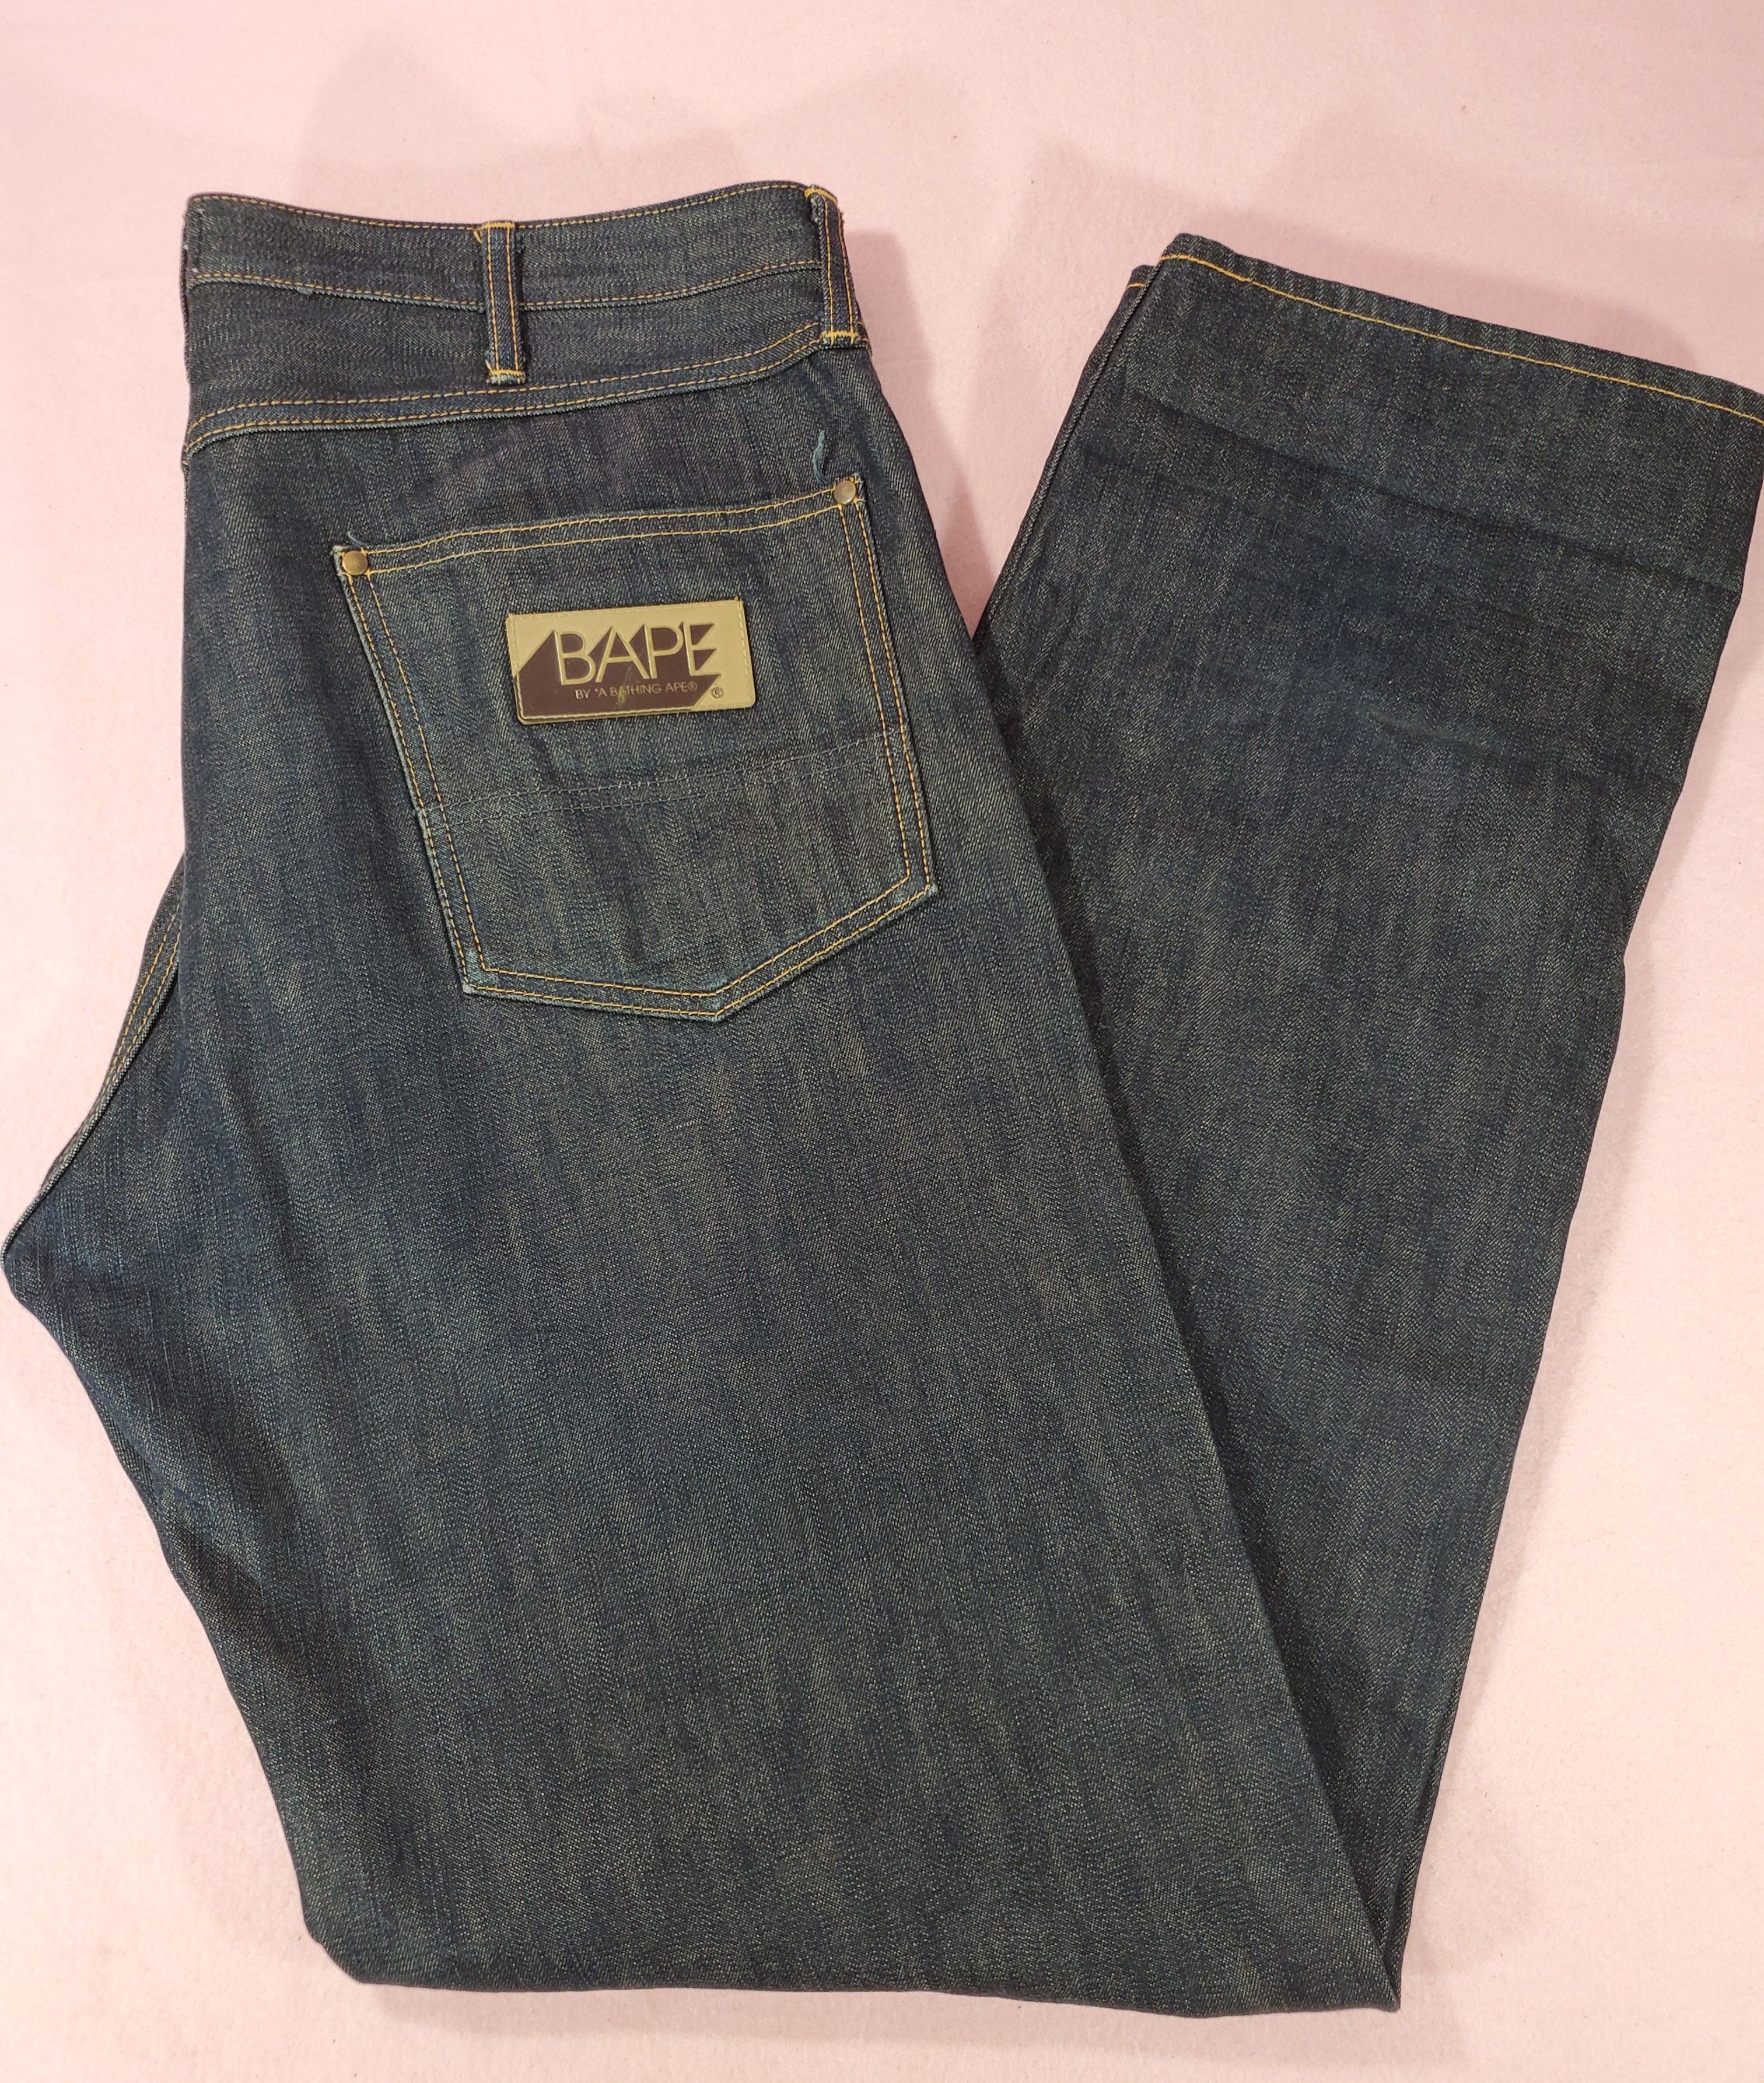 Bape Bape Twinsta STA Yellow Print Dark Denim Jeans XL Bapesta Size US 38 / EU 54 - 7 Preview